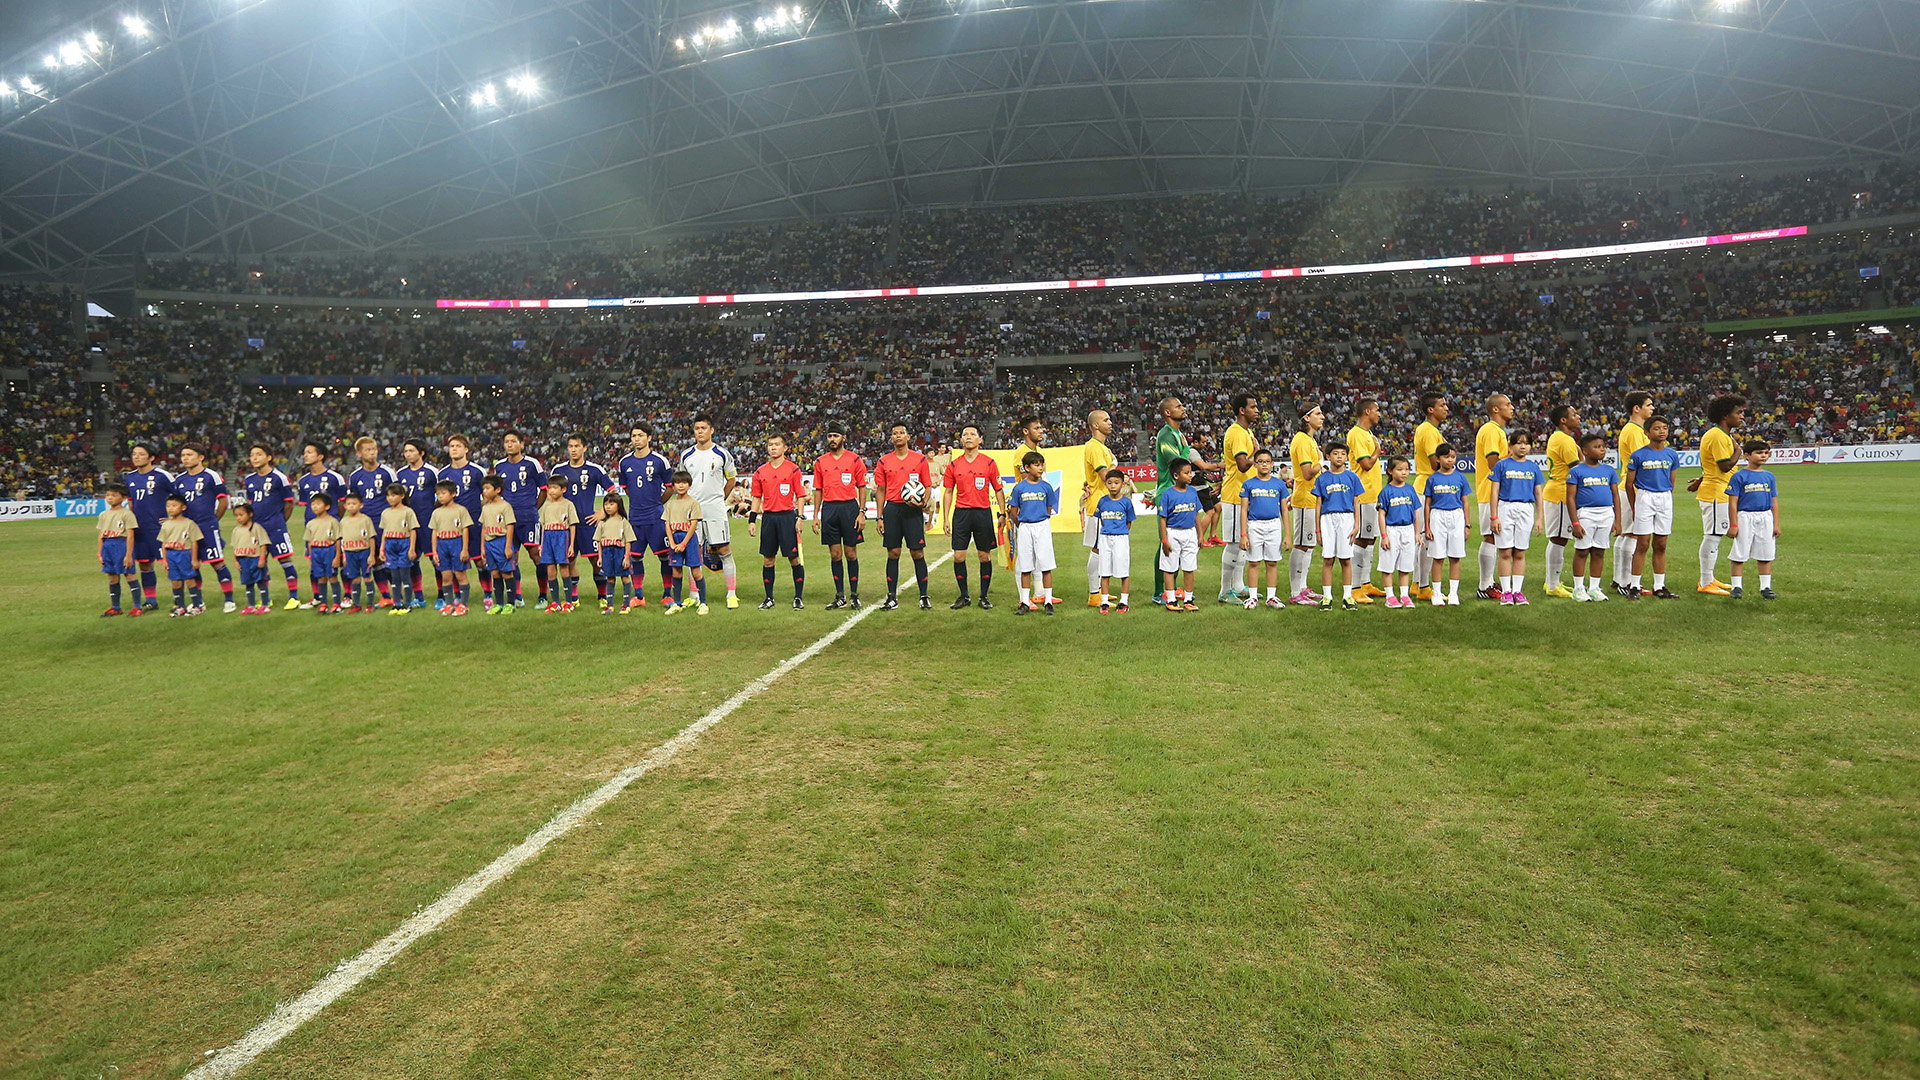 Panduan Tuan Rumah Piala AFF 2014 Singapura Goalcom